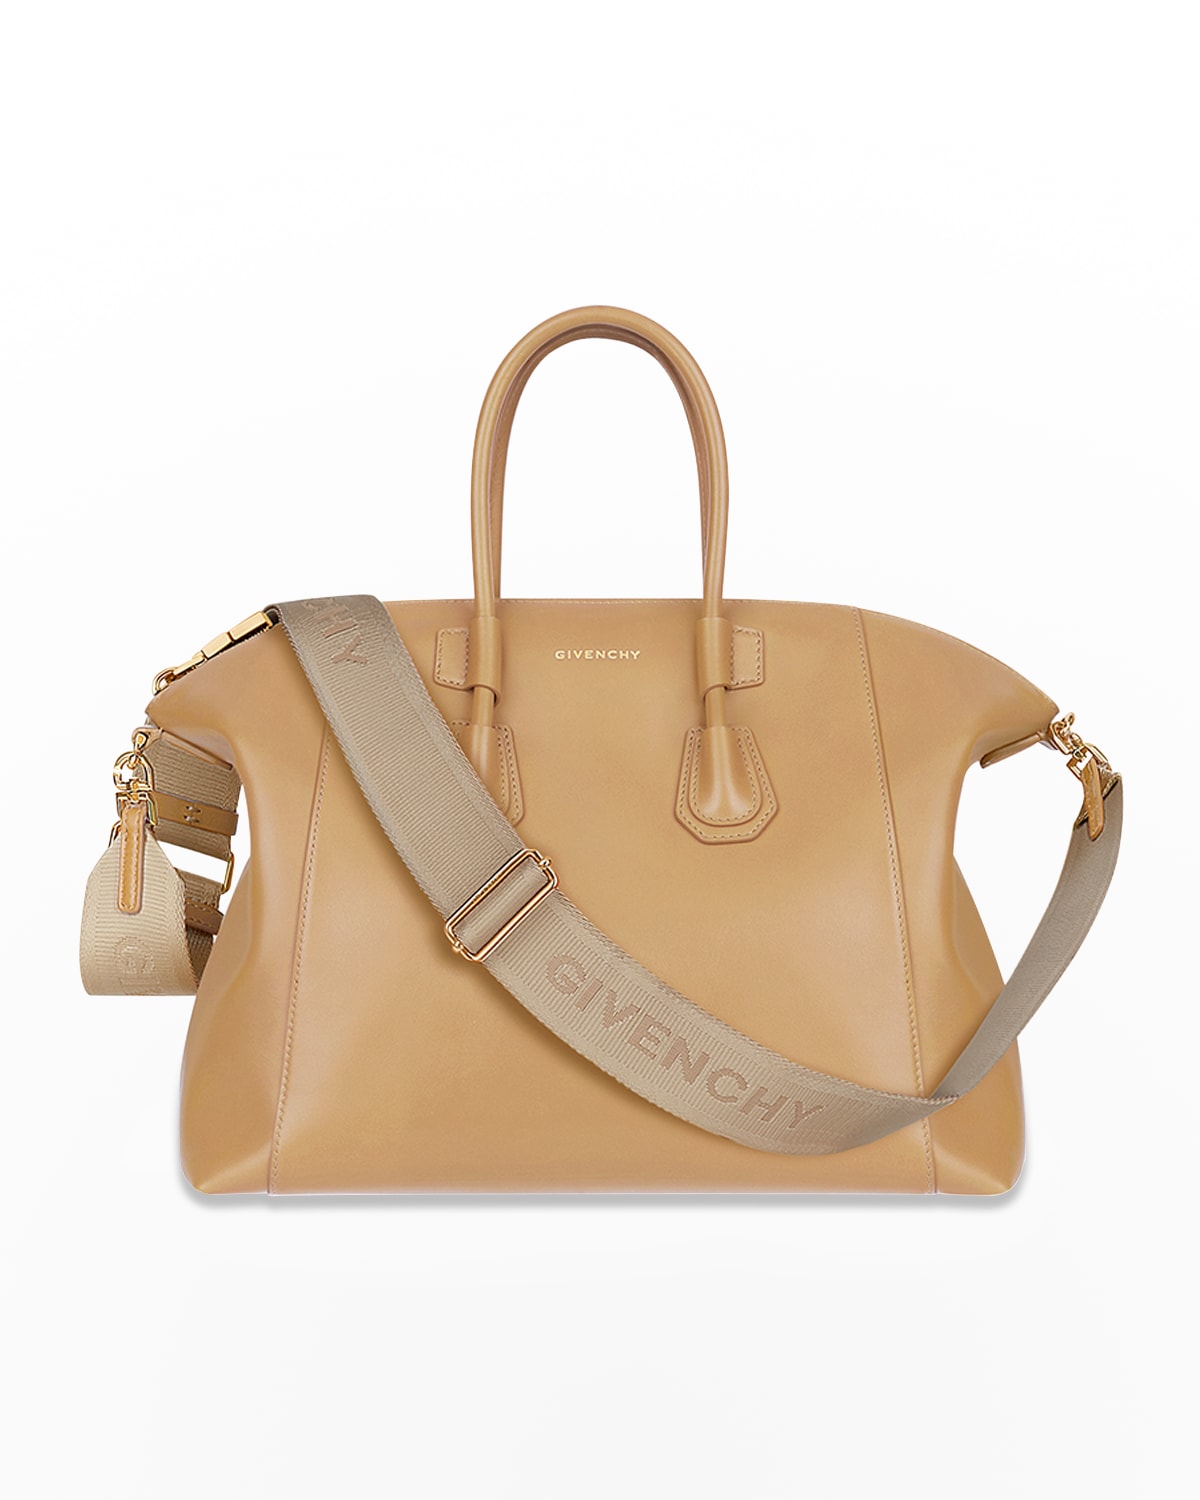 Givenchy Top Handle Bag | Neiman Marcus